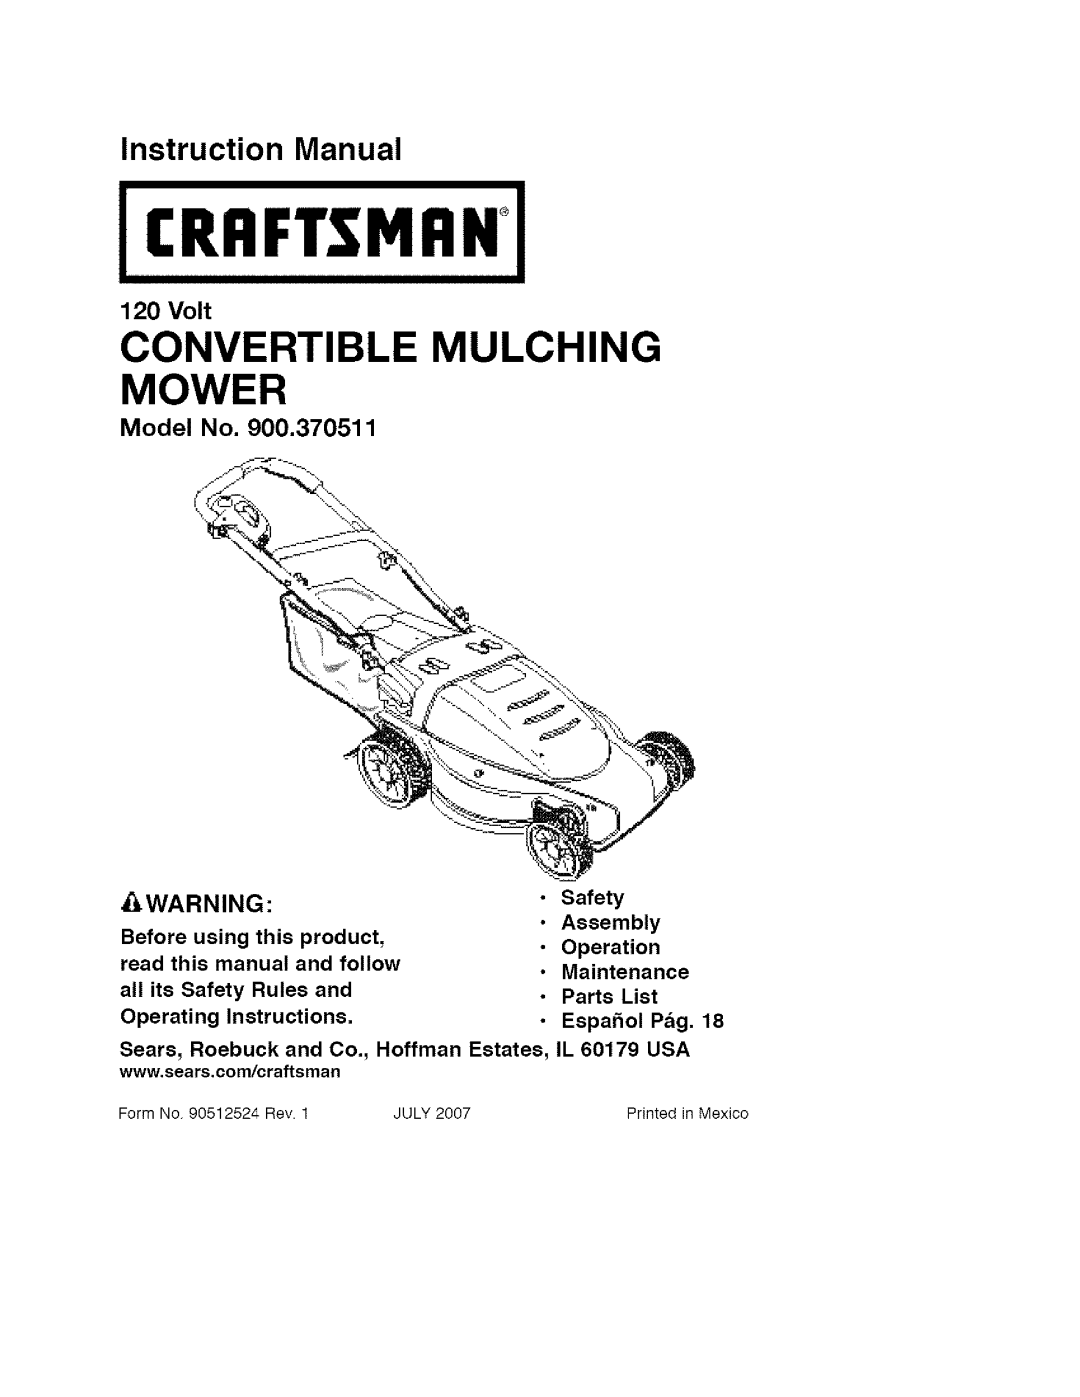 Craftsman 900.370511 manual Convertible Mulching Mower, Volt, Model No 